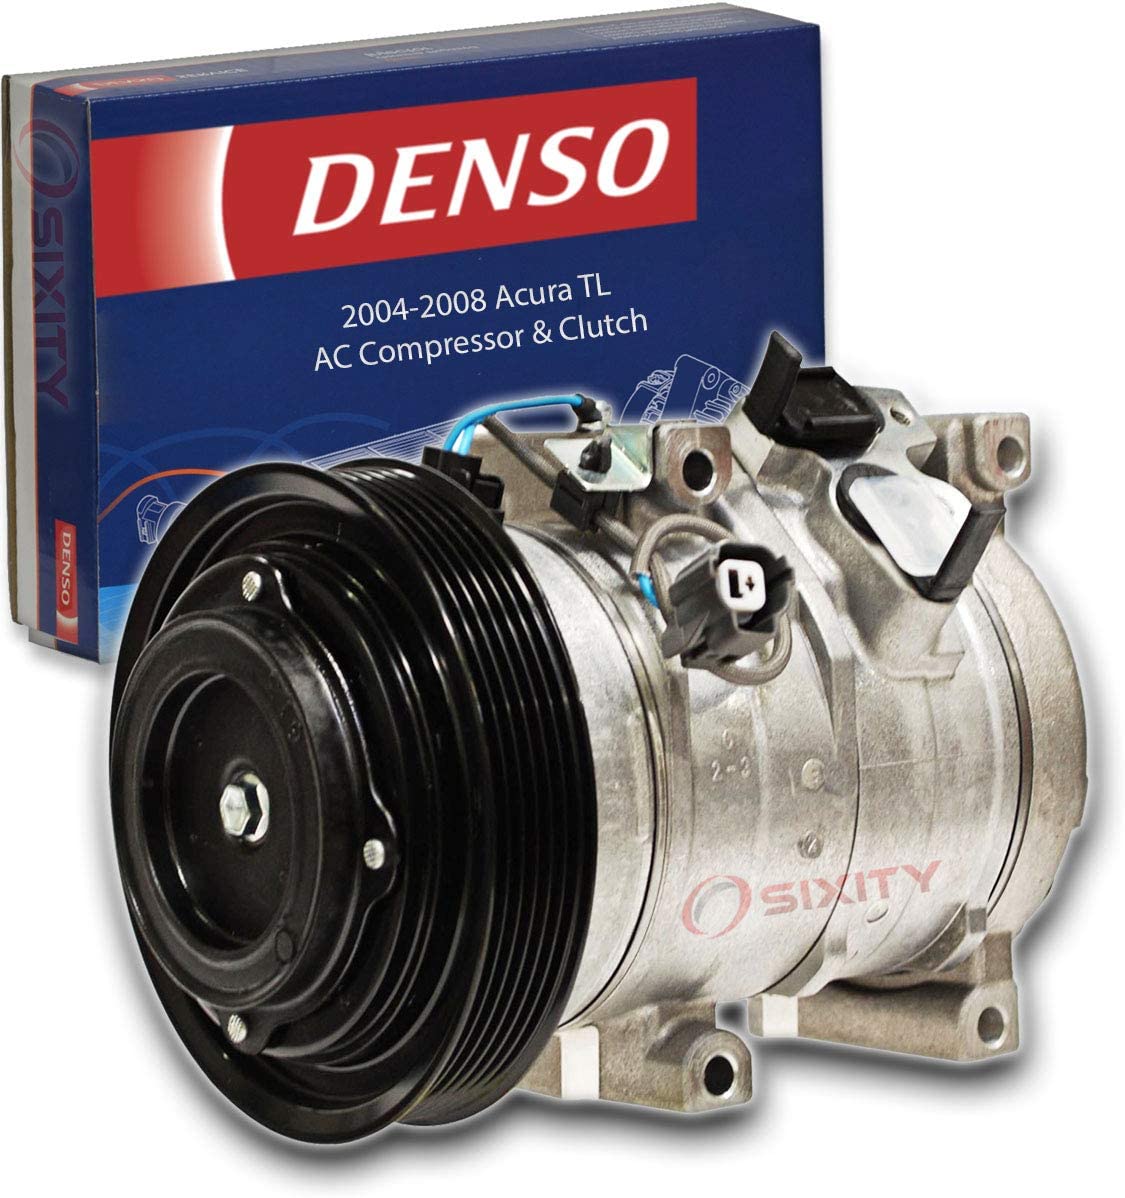 Denso AC Compressor & Clutch for Acura TL 3.2L 3.5L V6 2004-2008 HVAC Air Conditioning Heat